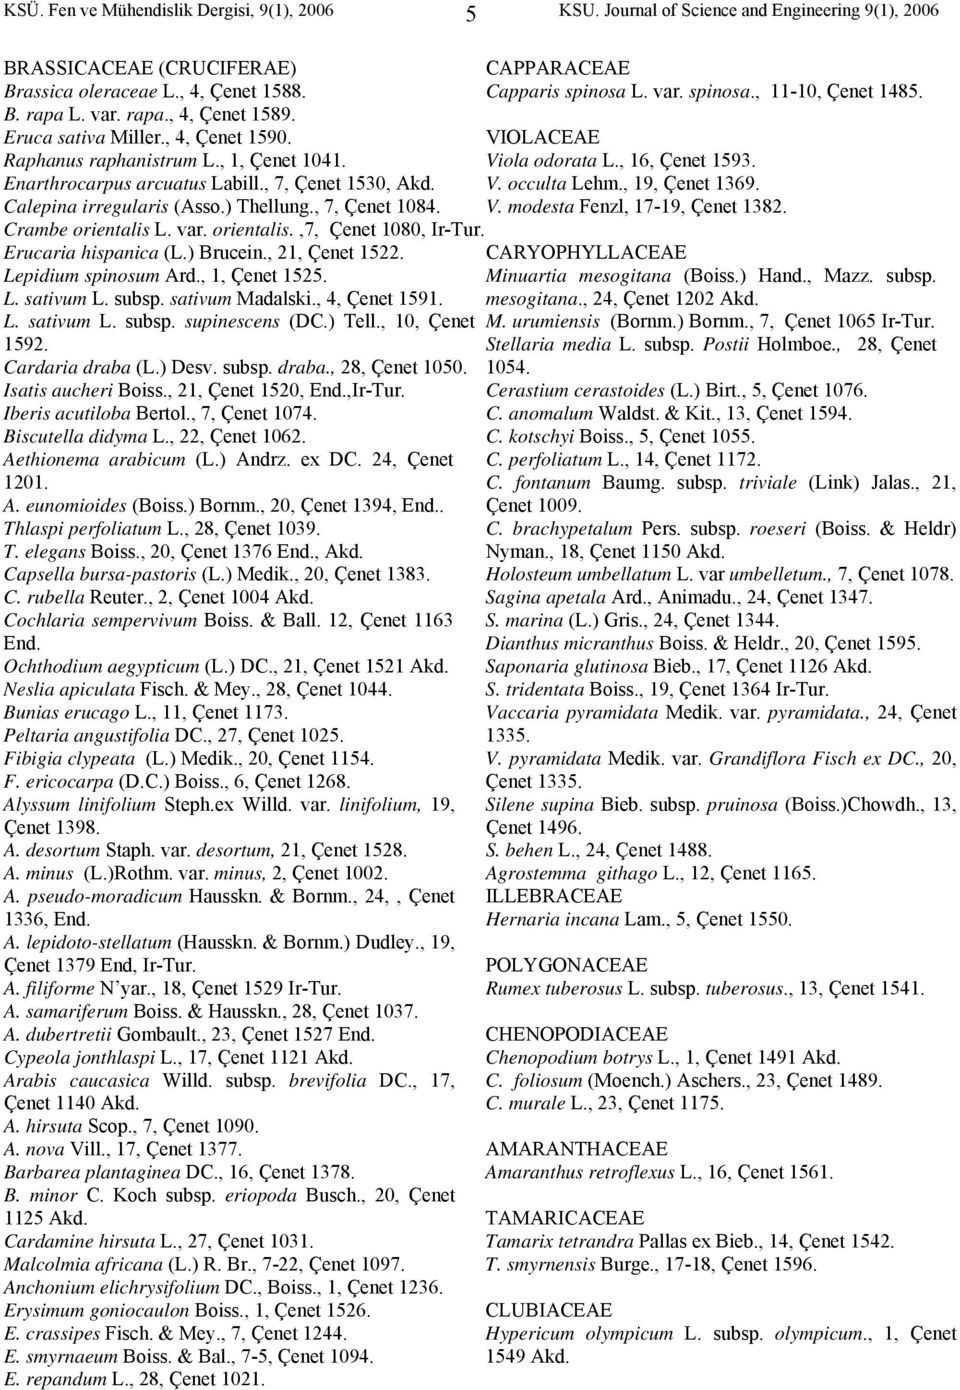 Crambe orientalis L. var. orientalis.,7, Çenet 1080, Ir- Erucaria hispanica (L.) Brucein., 21, Çenet 1522. Lepidium spinosum Ard., 1, Çenet 1525. L. sativum L. subsp. sativum Madalski., 4, Çenet 1591.